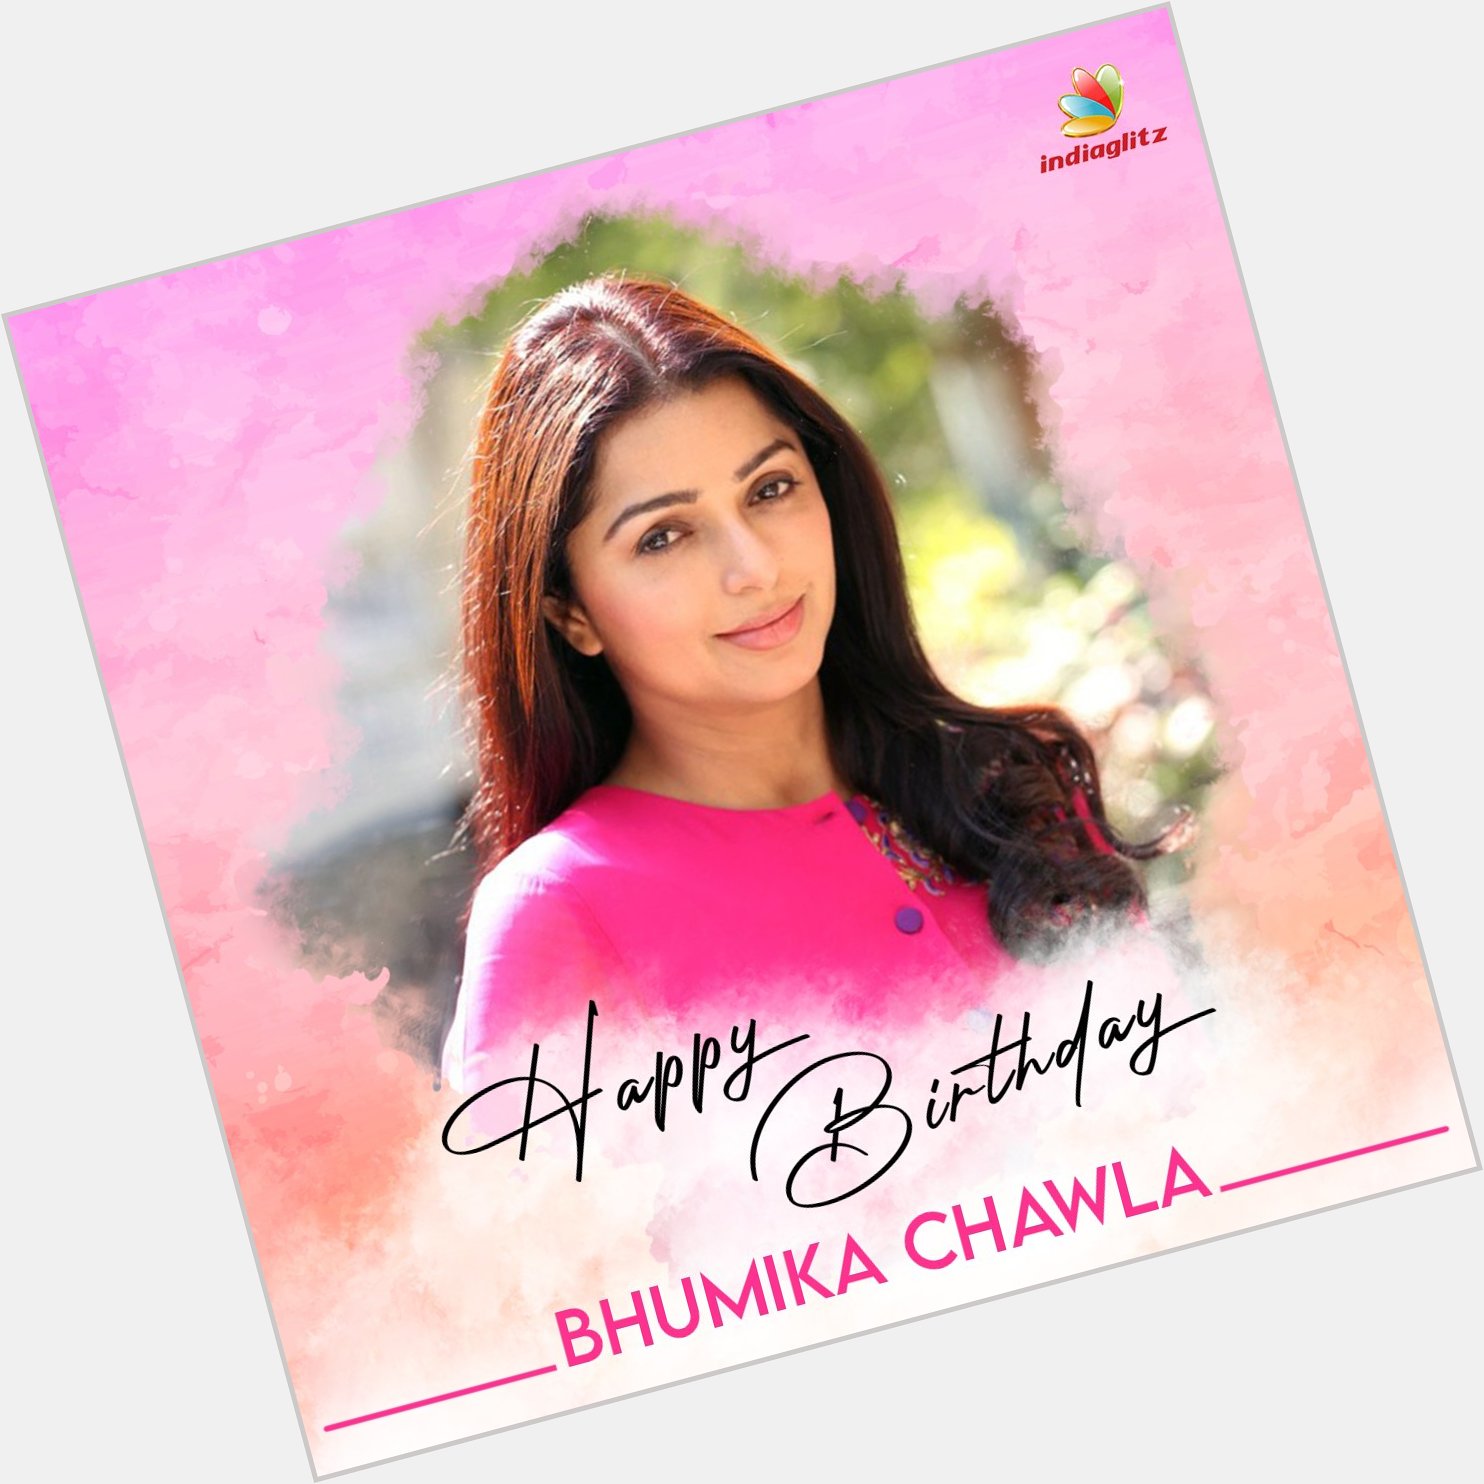 Wishing Actress Bhumika Chawla a Very Happy Birthday   